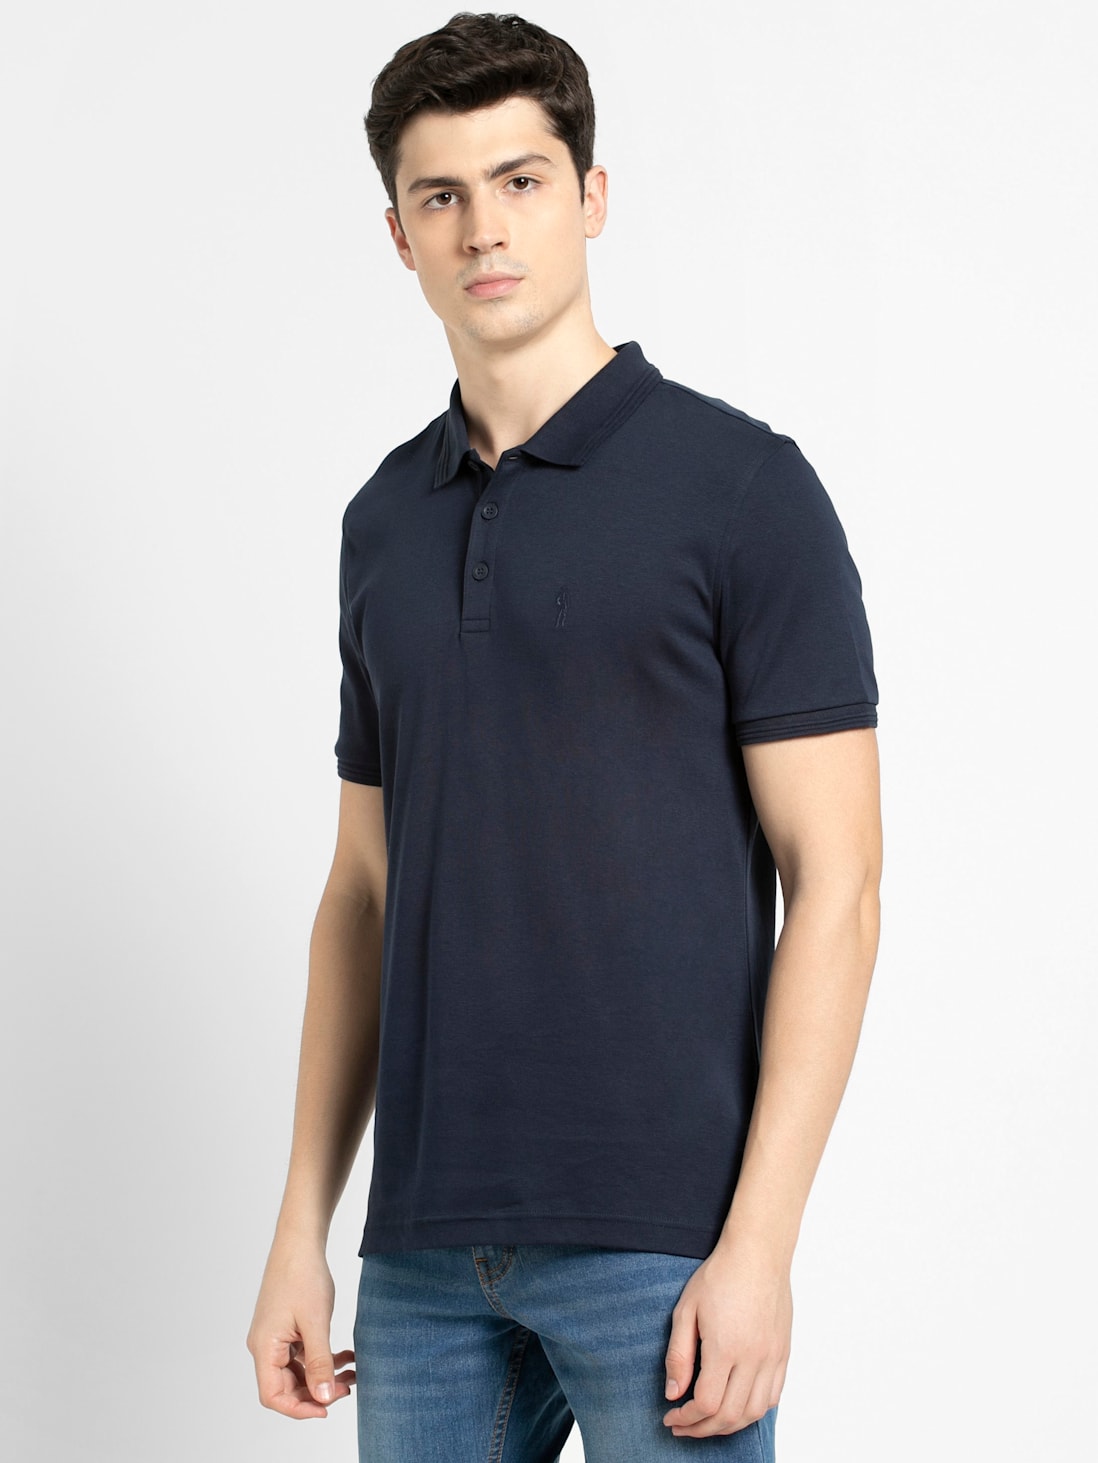 Navy Regular Fit Half Sleeve Polo T-Shirt for Men 3912 | Jockey India